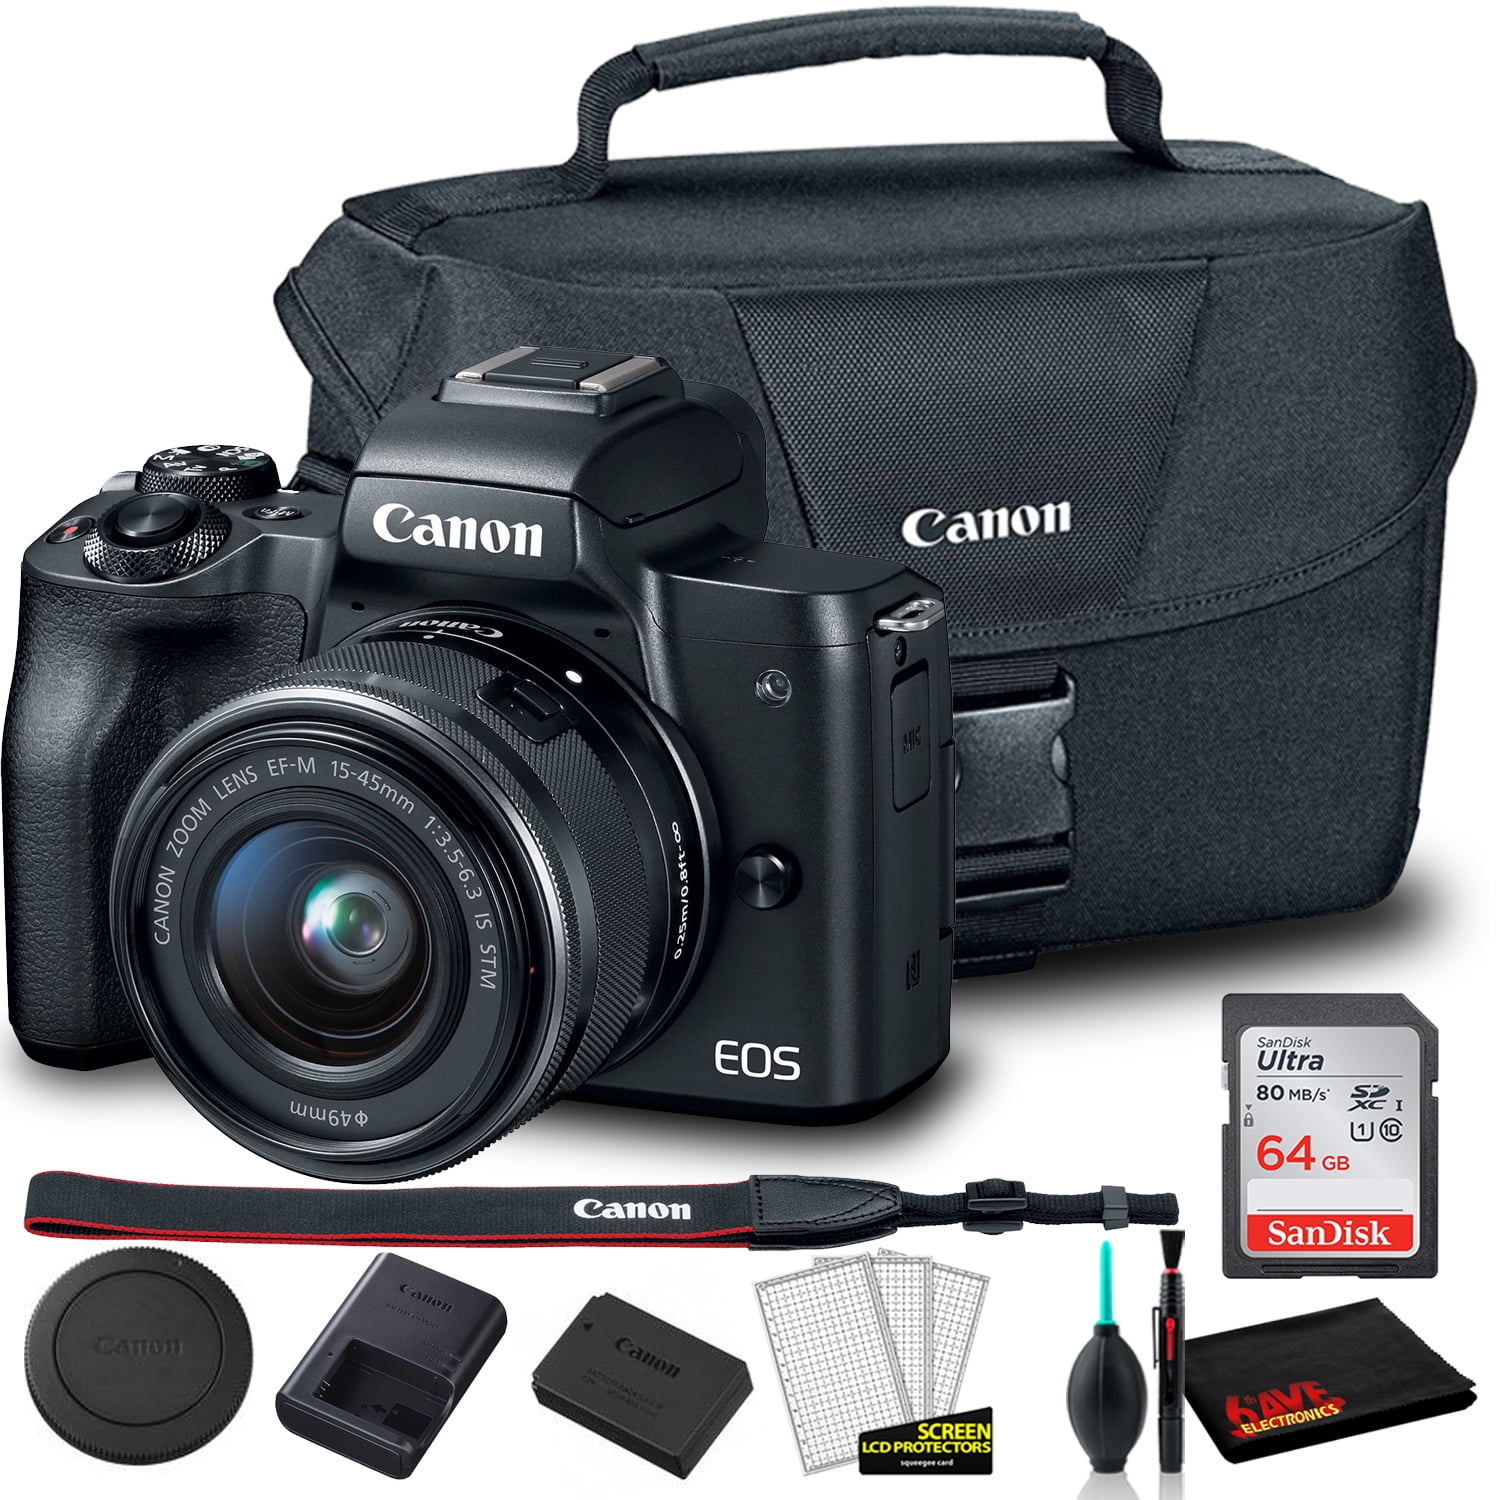 uitvegen Ontkennen architect Canon EOS M50 Mirrorless Digital Camera with 15-45mm Lens (Black)  (2680C011) + Canon EOS Bag + Sandisk Ultra 64GB Card + Clean and Care Kit -  Walmart.com